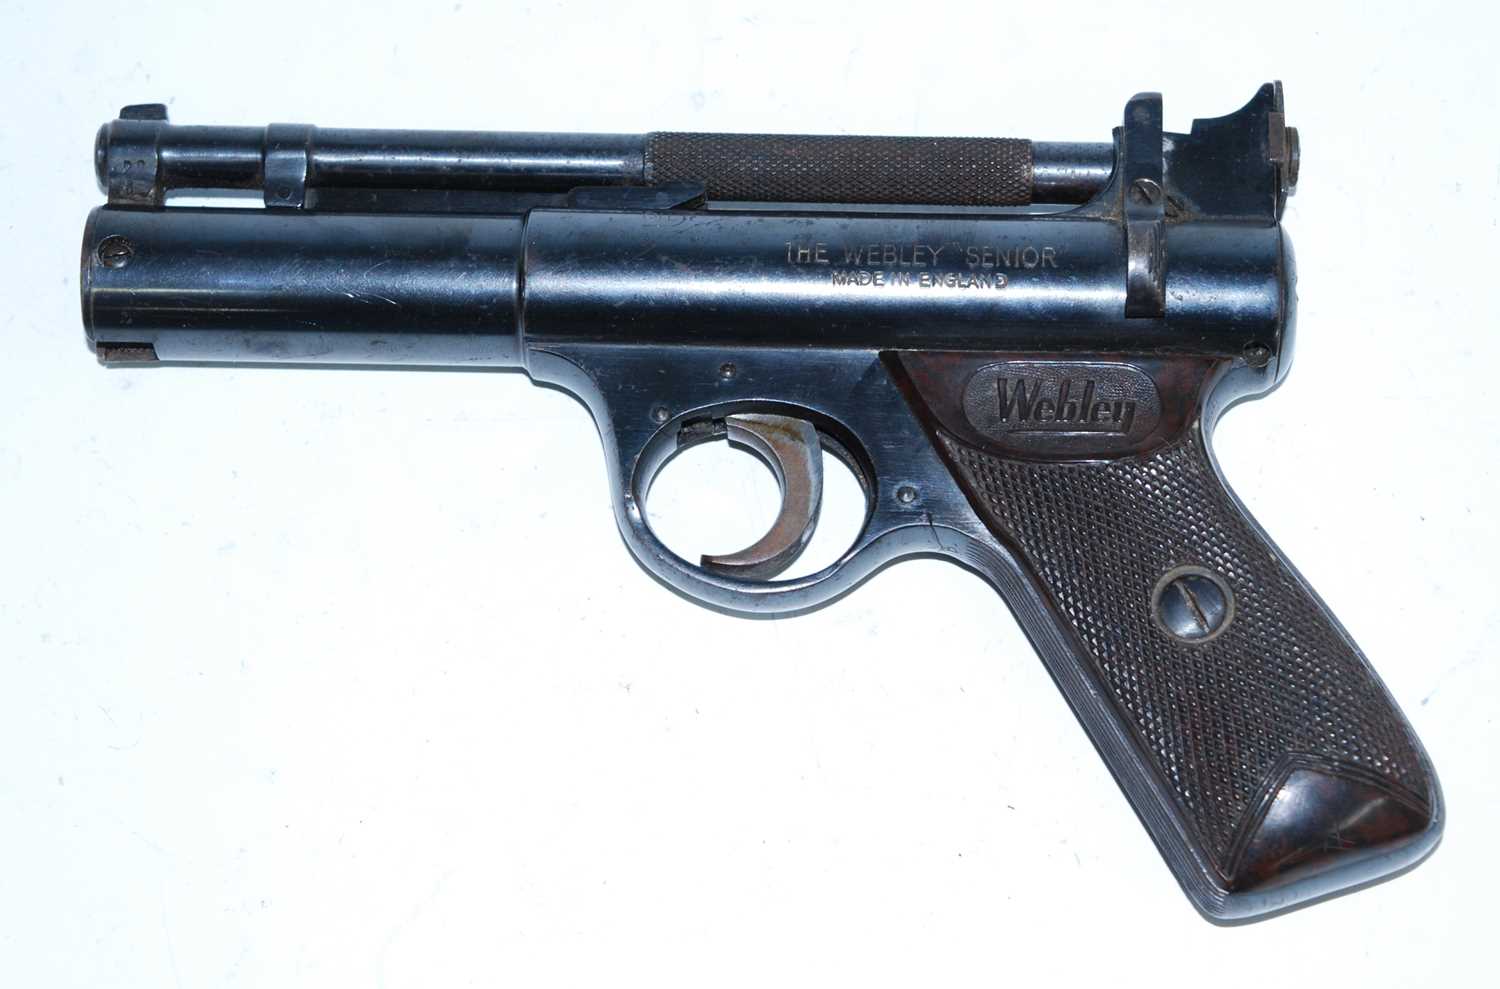 The Webley "Senior" .22 calibre air pistol, having a 17cm spring barrel and chequered bakelite